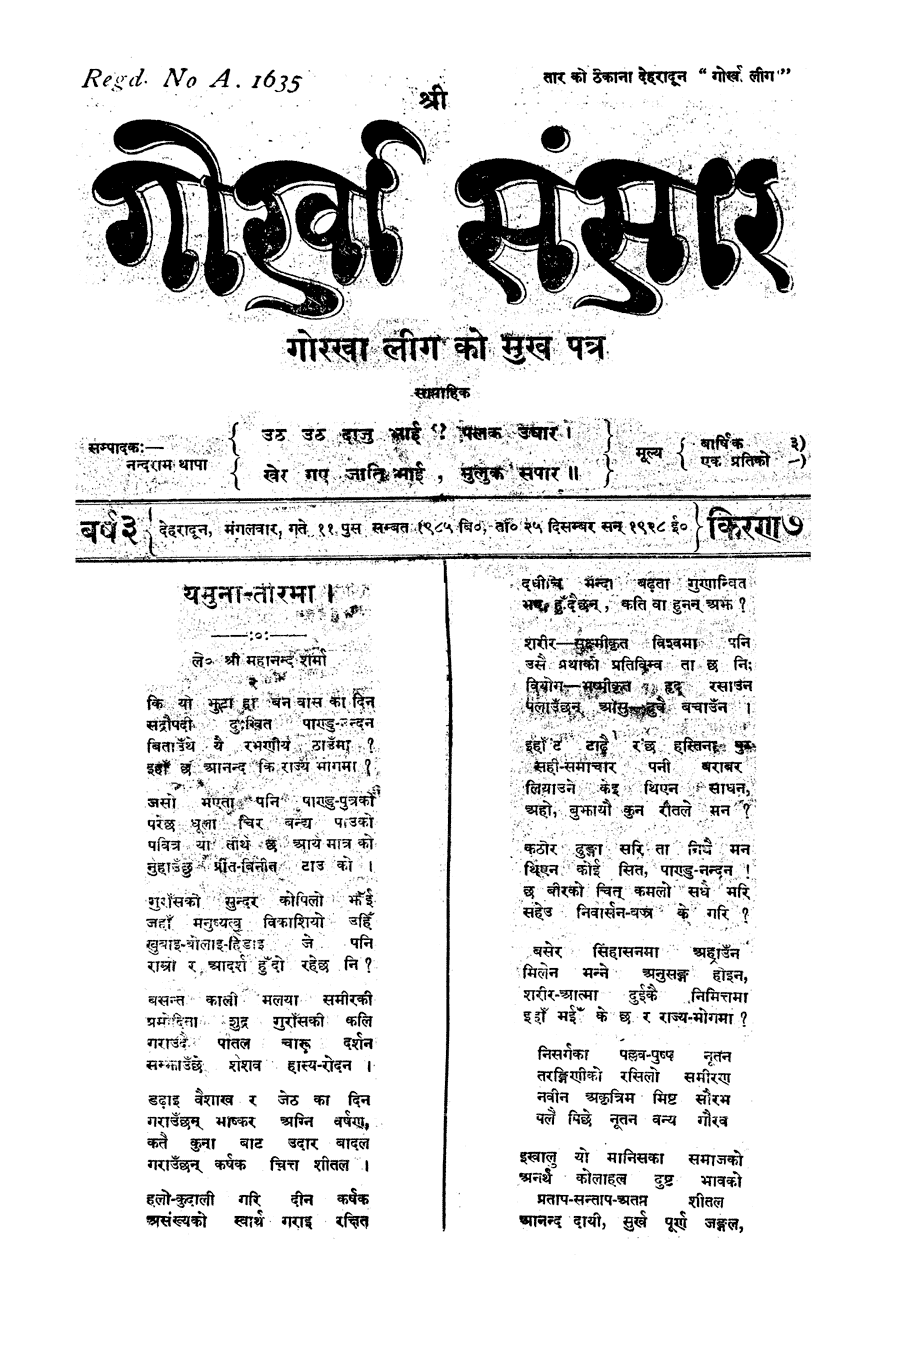 Gorkha Sansar, 25 Dec 1928, page 1